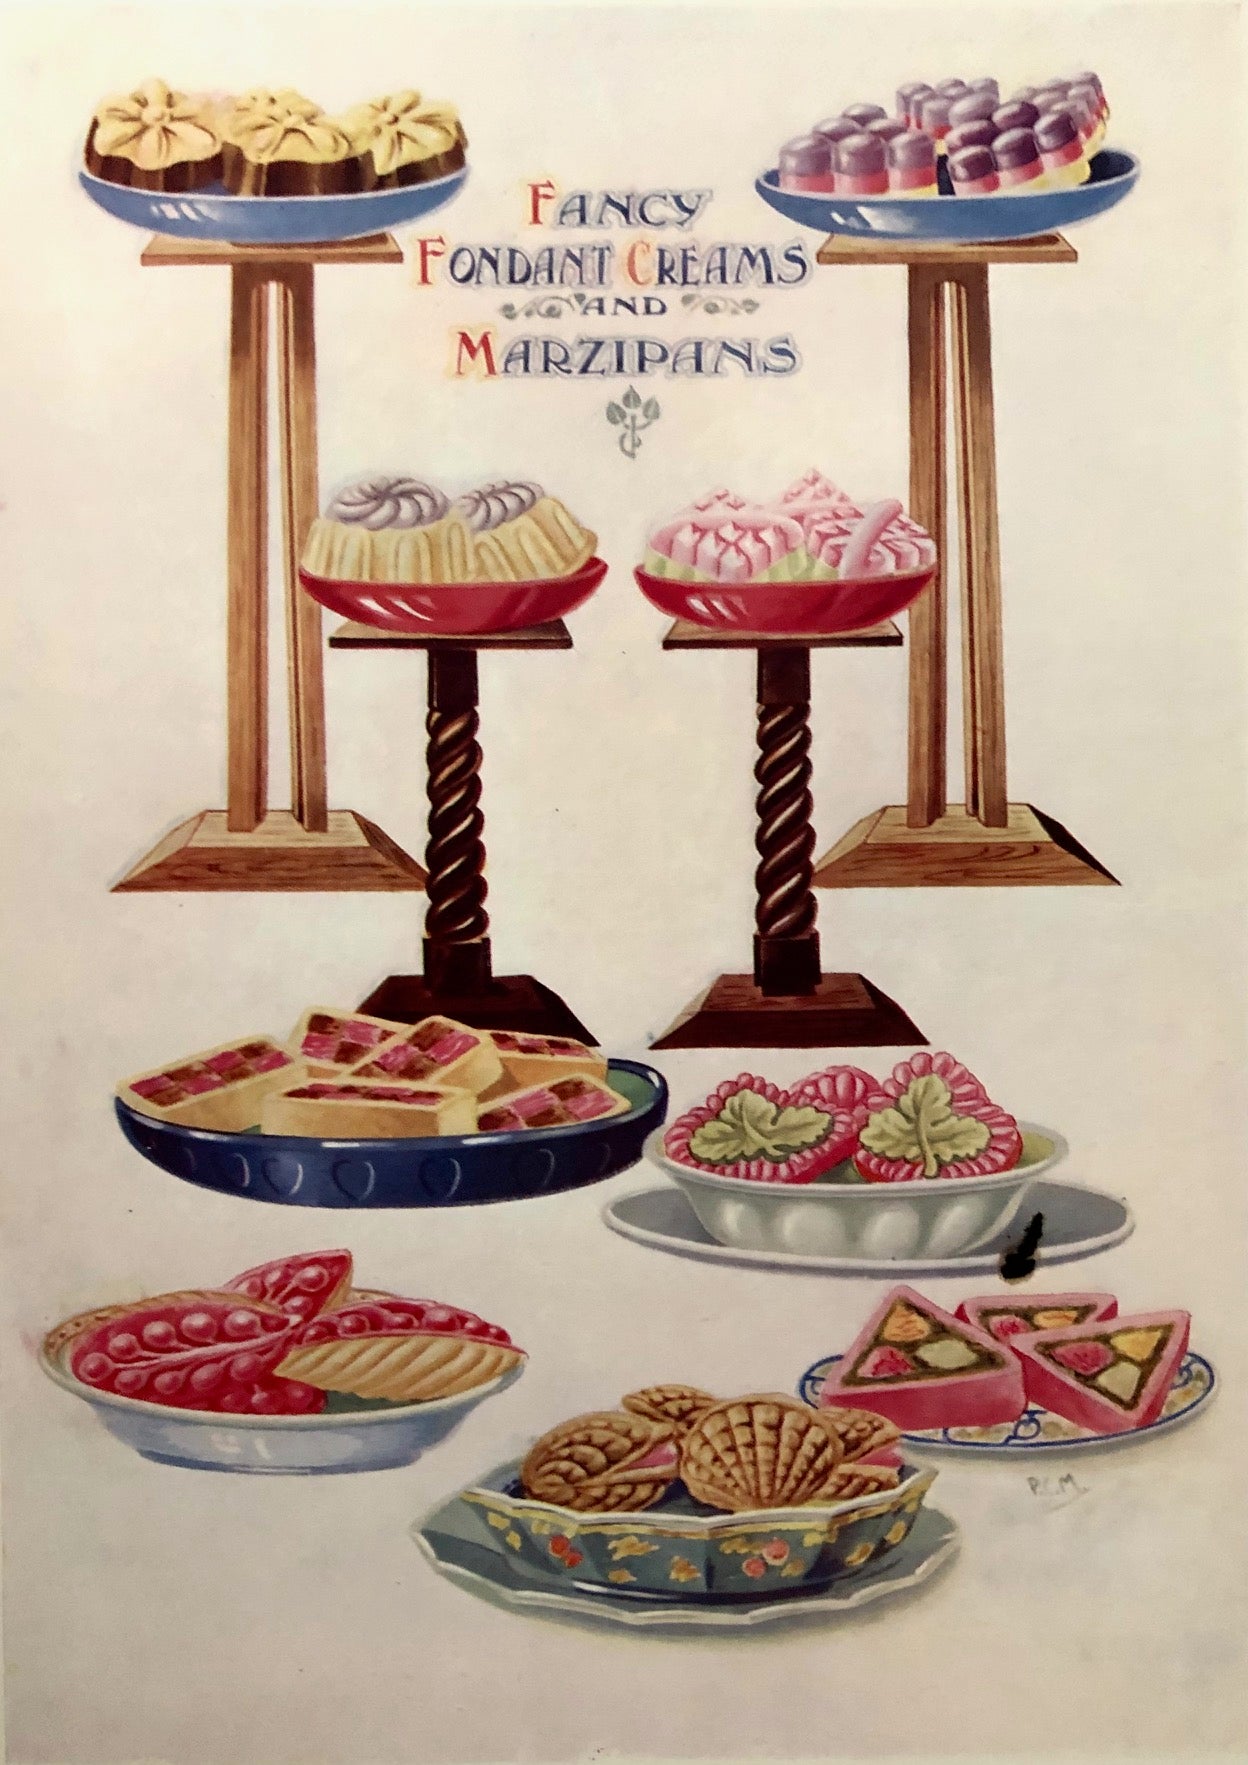 (Confectionery) George F. Burton. Home-Made Chocolates, Bon-Bons, Desserts, Fine Art Sugar Work